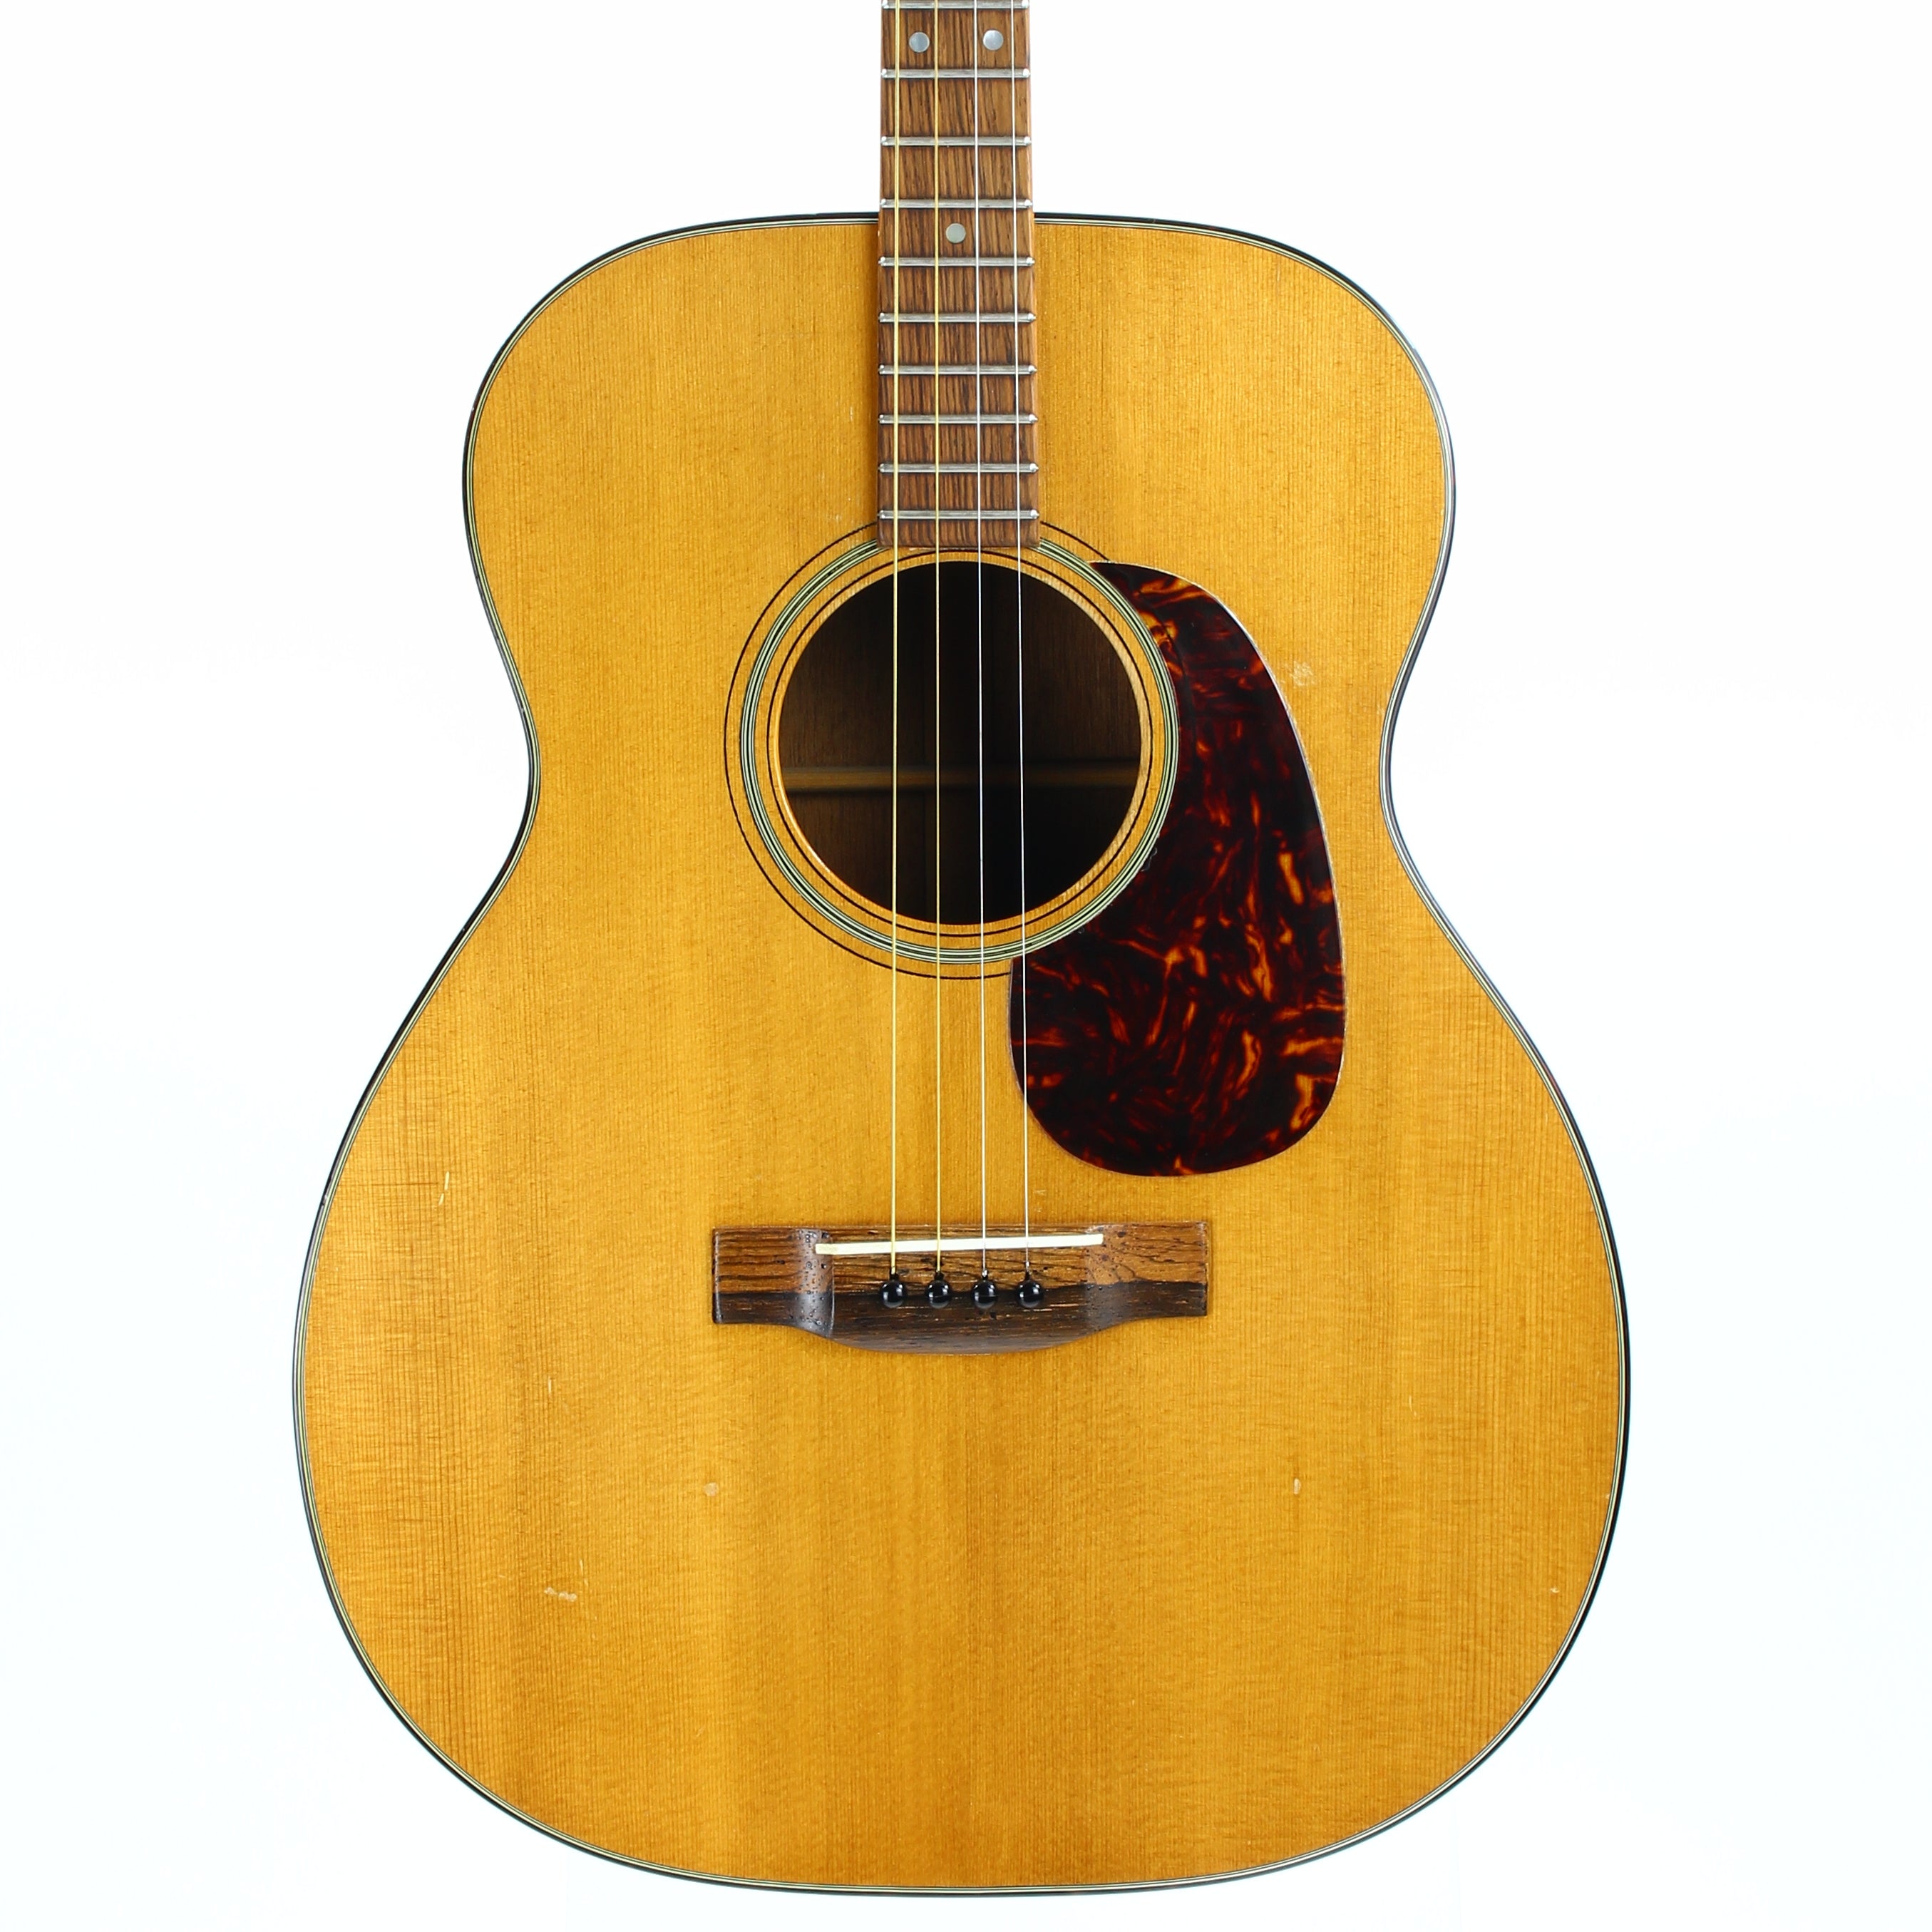 1963 Martin 0-18T Tenor 4-String Guitar --Brazilian Rosewood Fingerboard/Bridge, Tortoise Guard, VINTAGE!